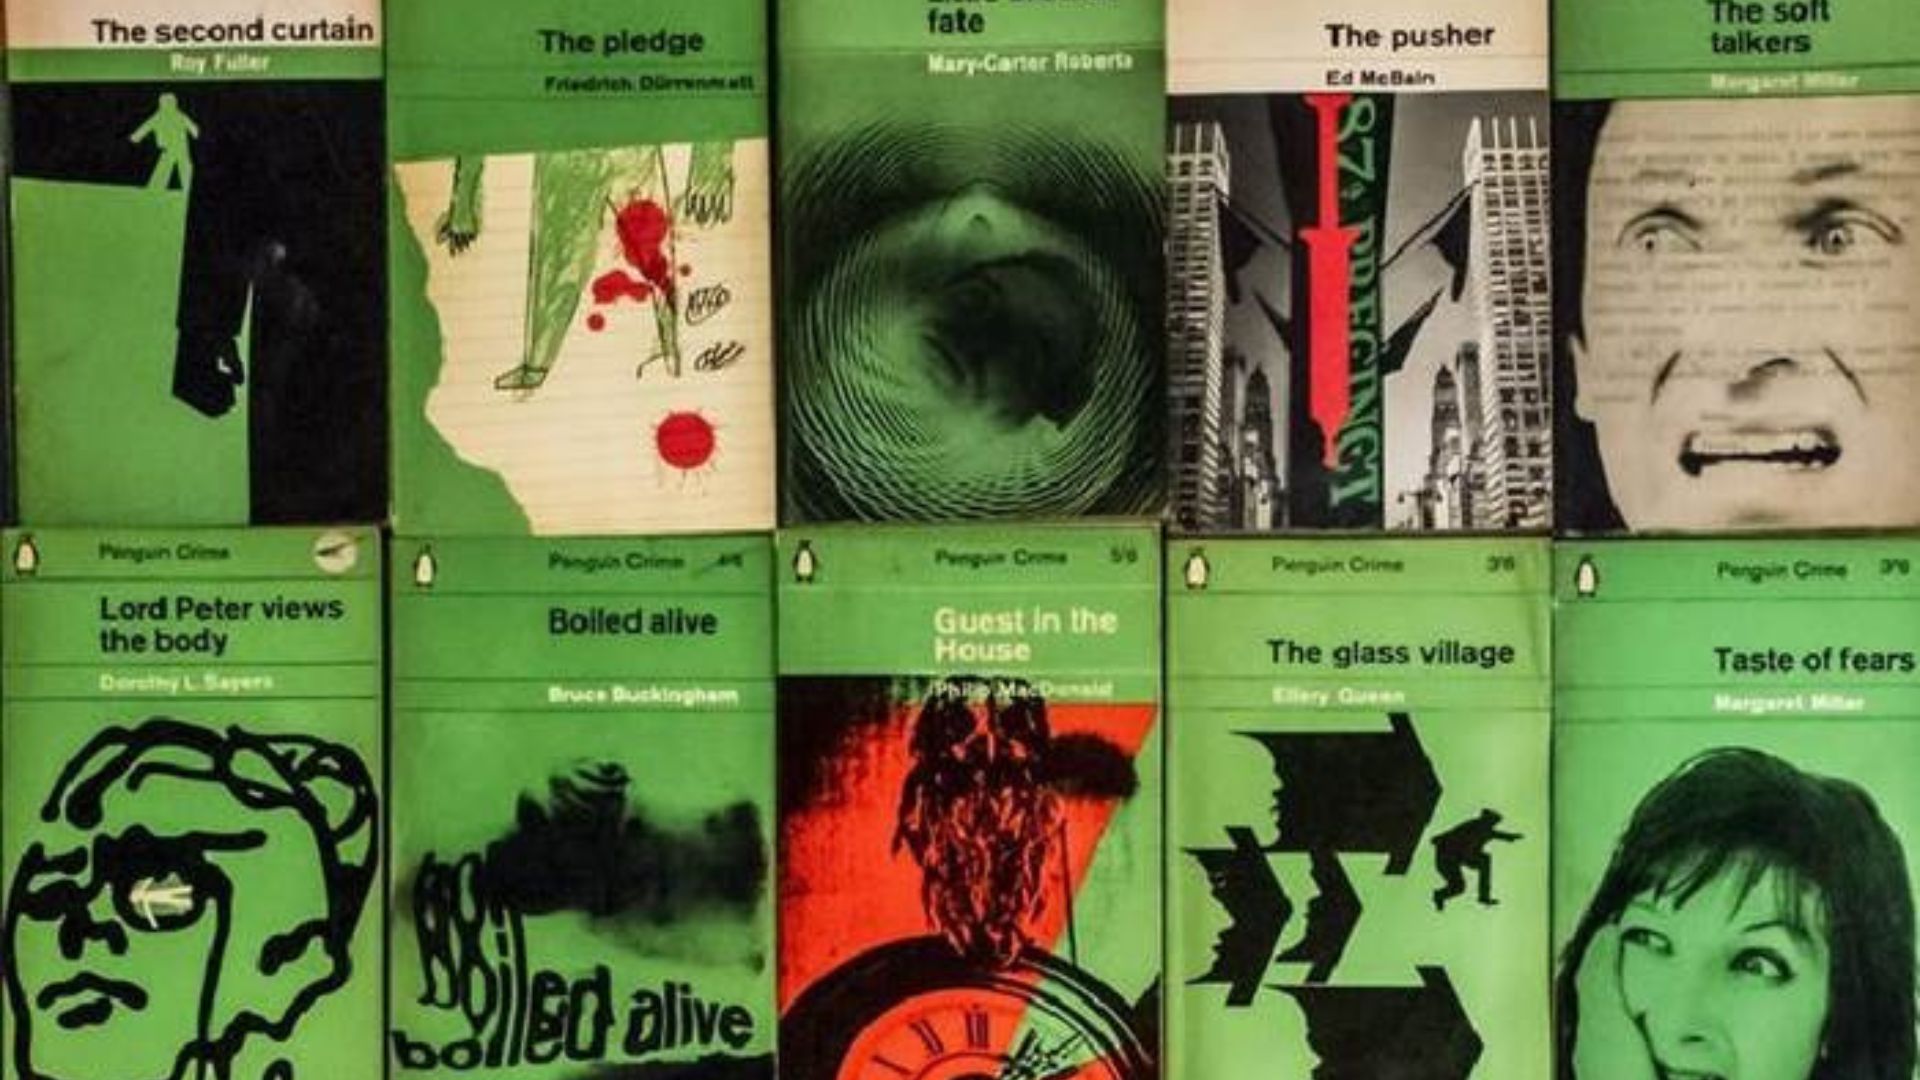 Penguin Classics Series in Sets of 10  Penguin classics, Classic books,  Penguin books